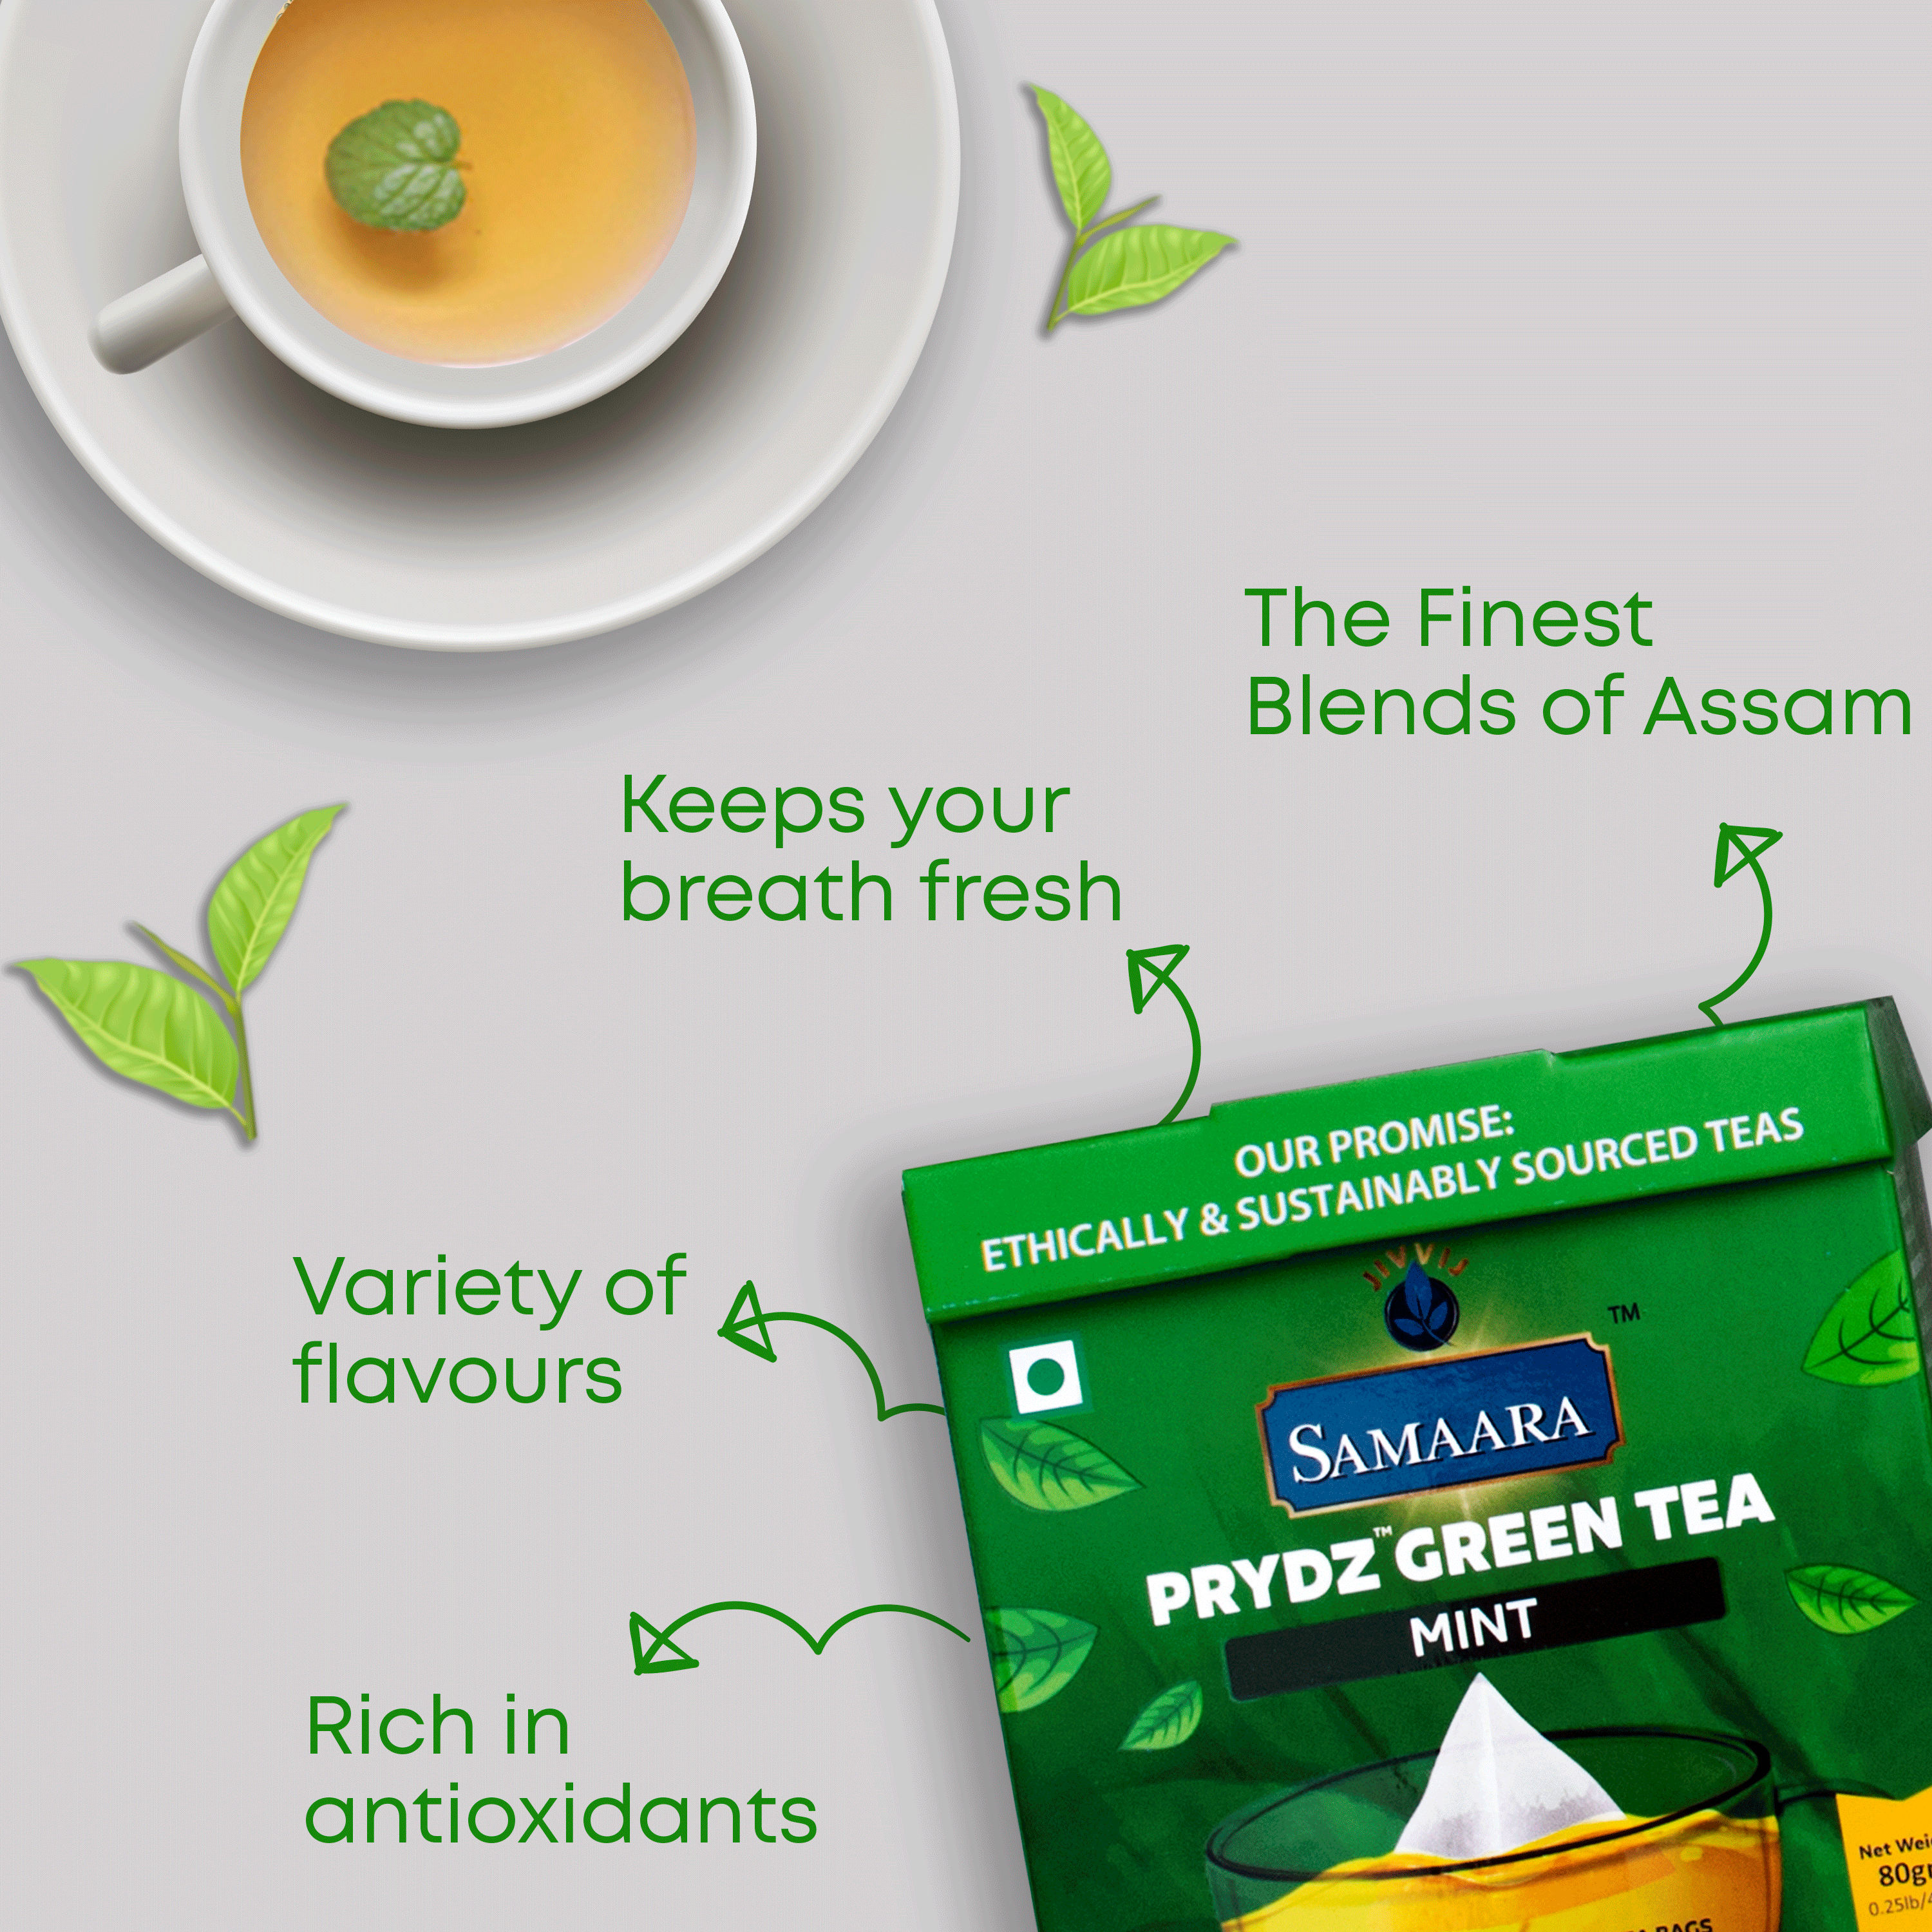 Jivvij Samaara Prydz Pyramid Mint Green Tea 40Tea Bags